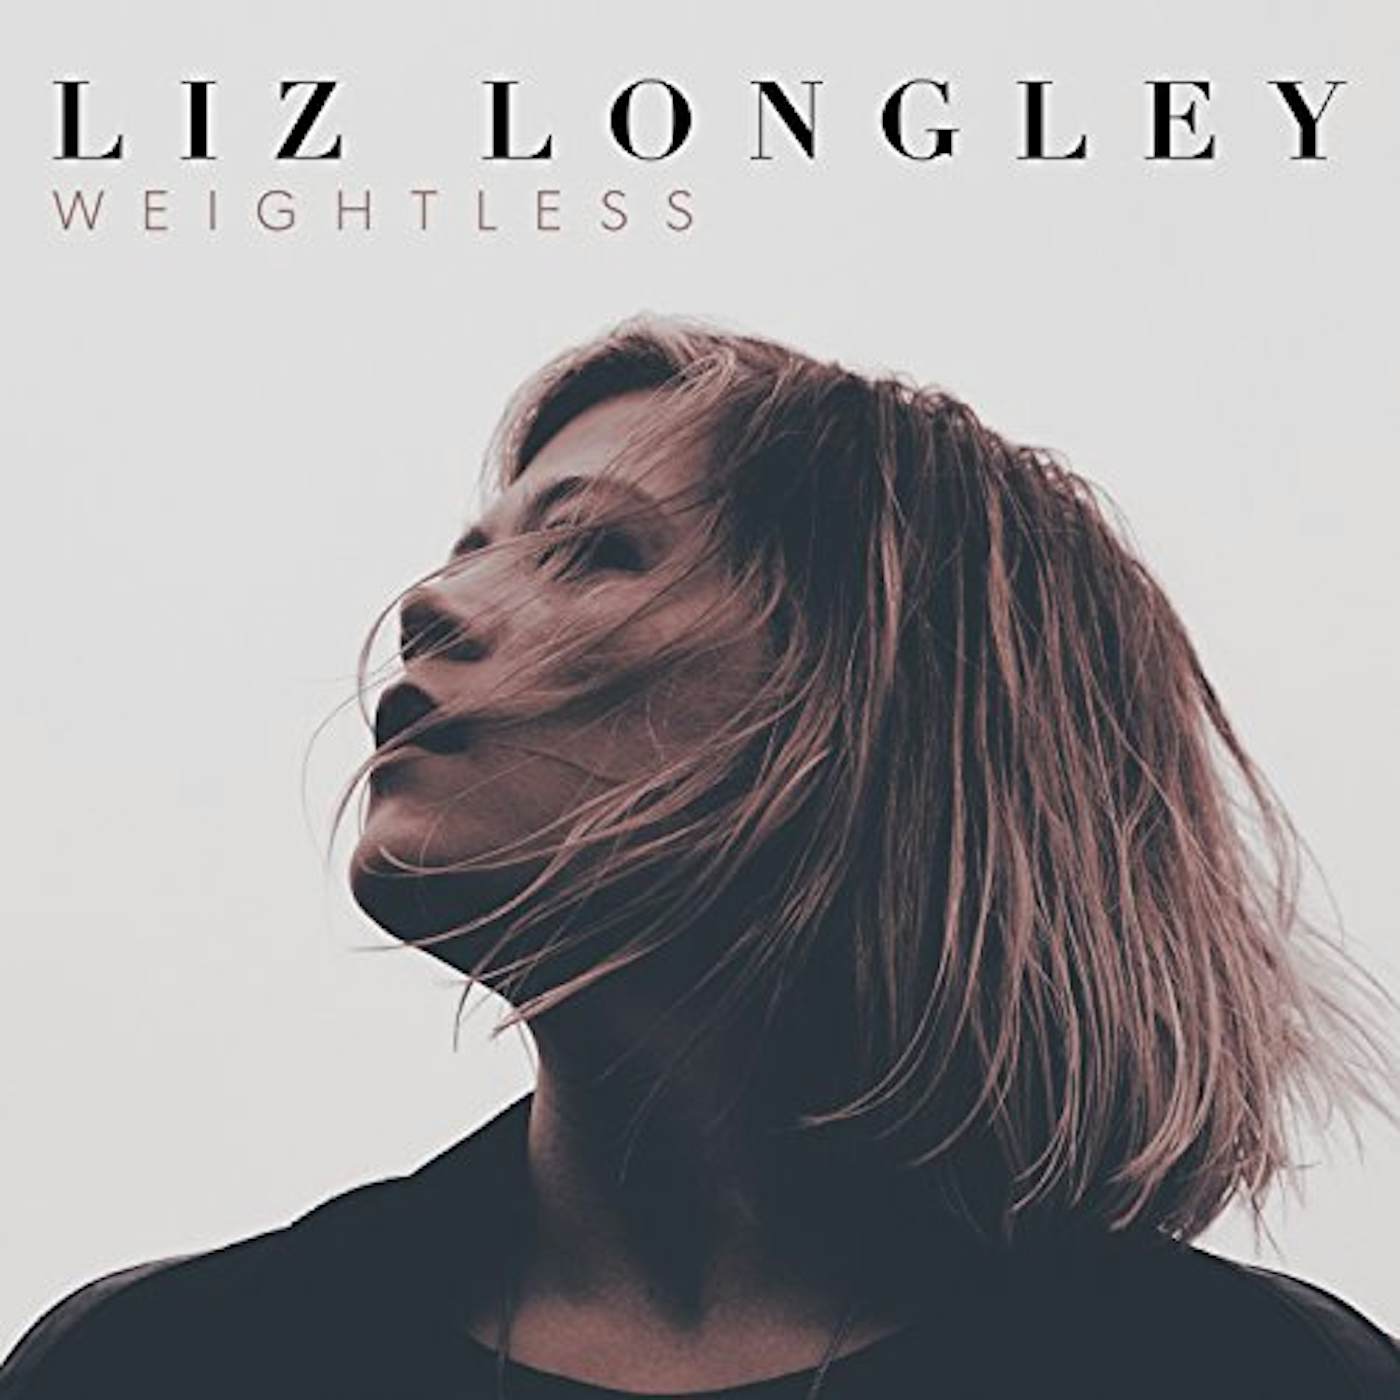 Liz Longley Weightless Vinyl Record